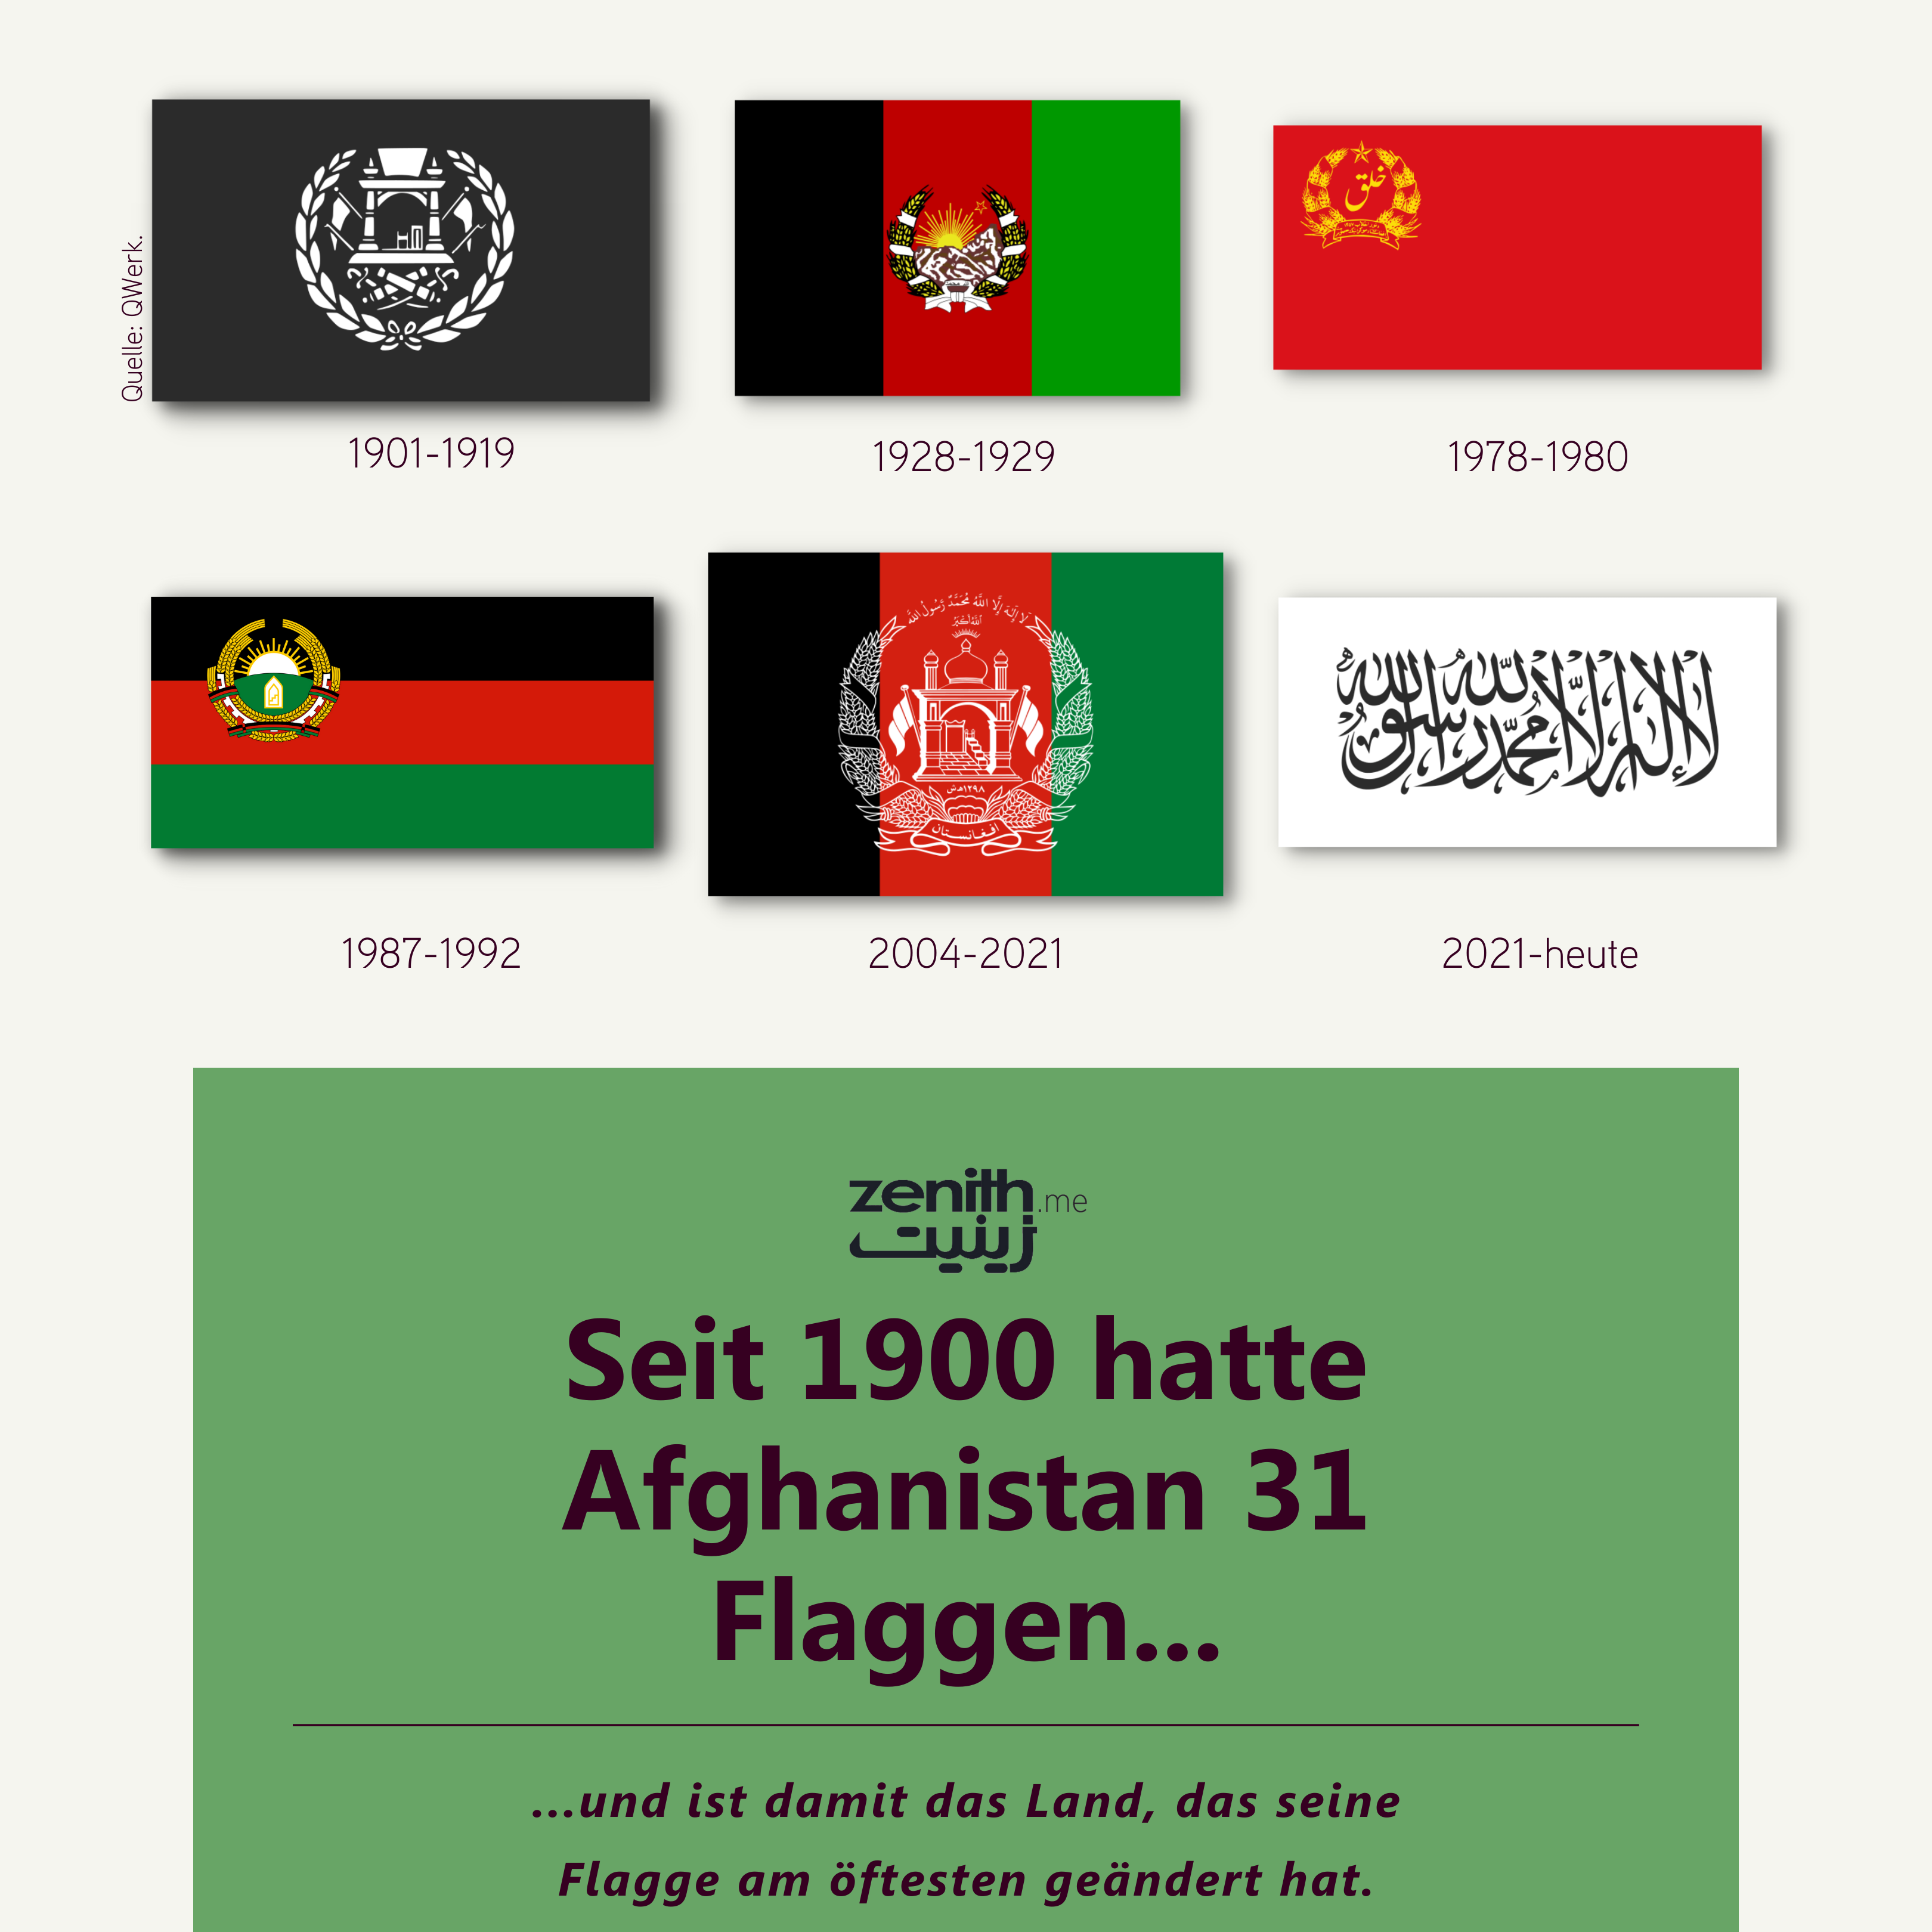 Seit 1900 hatte Afghanistan 31 Flaggen.